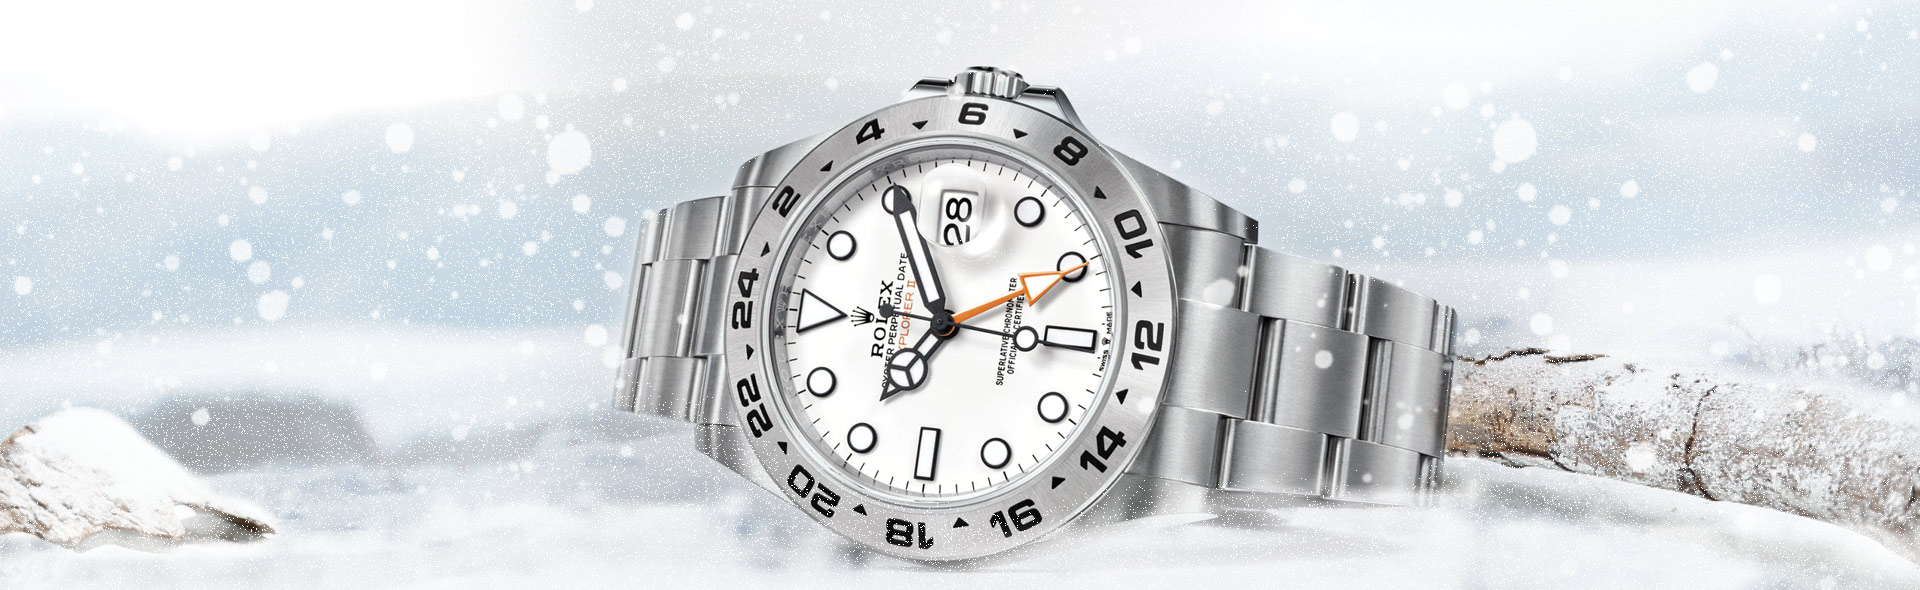 Toppkopior.com: Schweiziska replika klockor, Rolex kopia sverige,Bästa klockor kopior